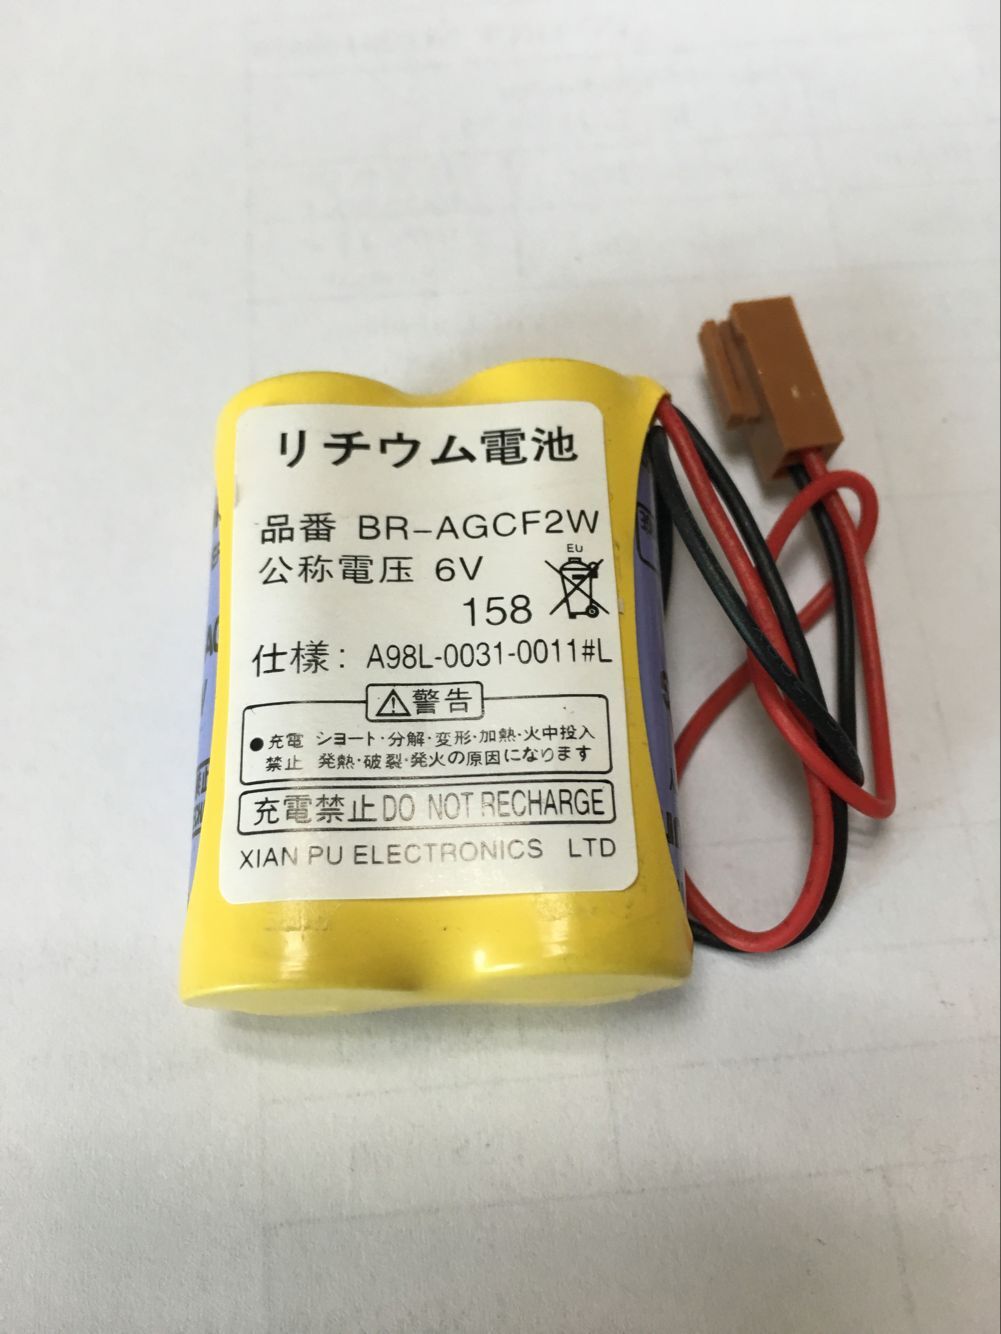  BR-AGCF2W  Panasonic Battery